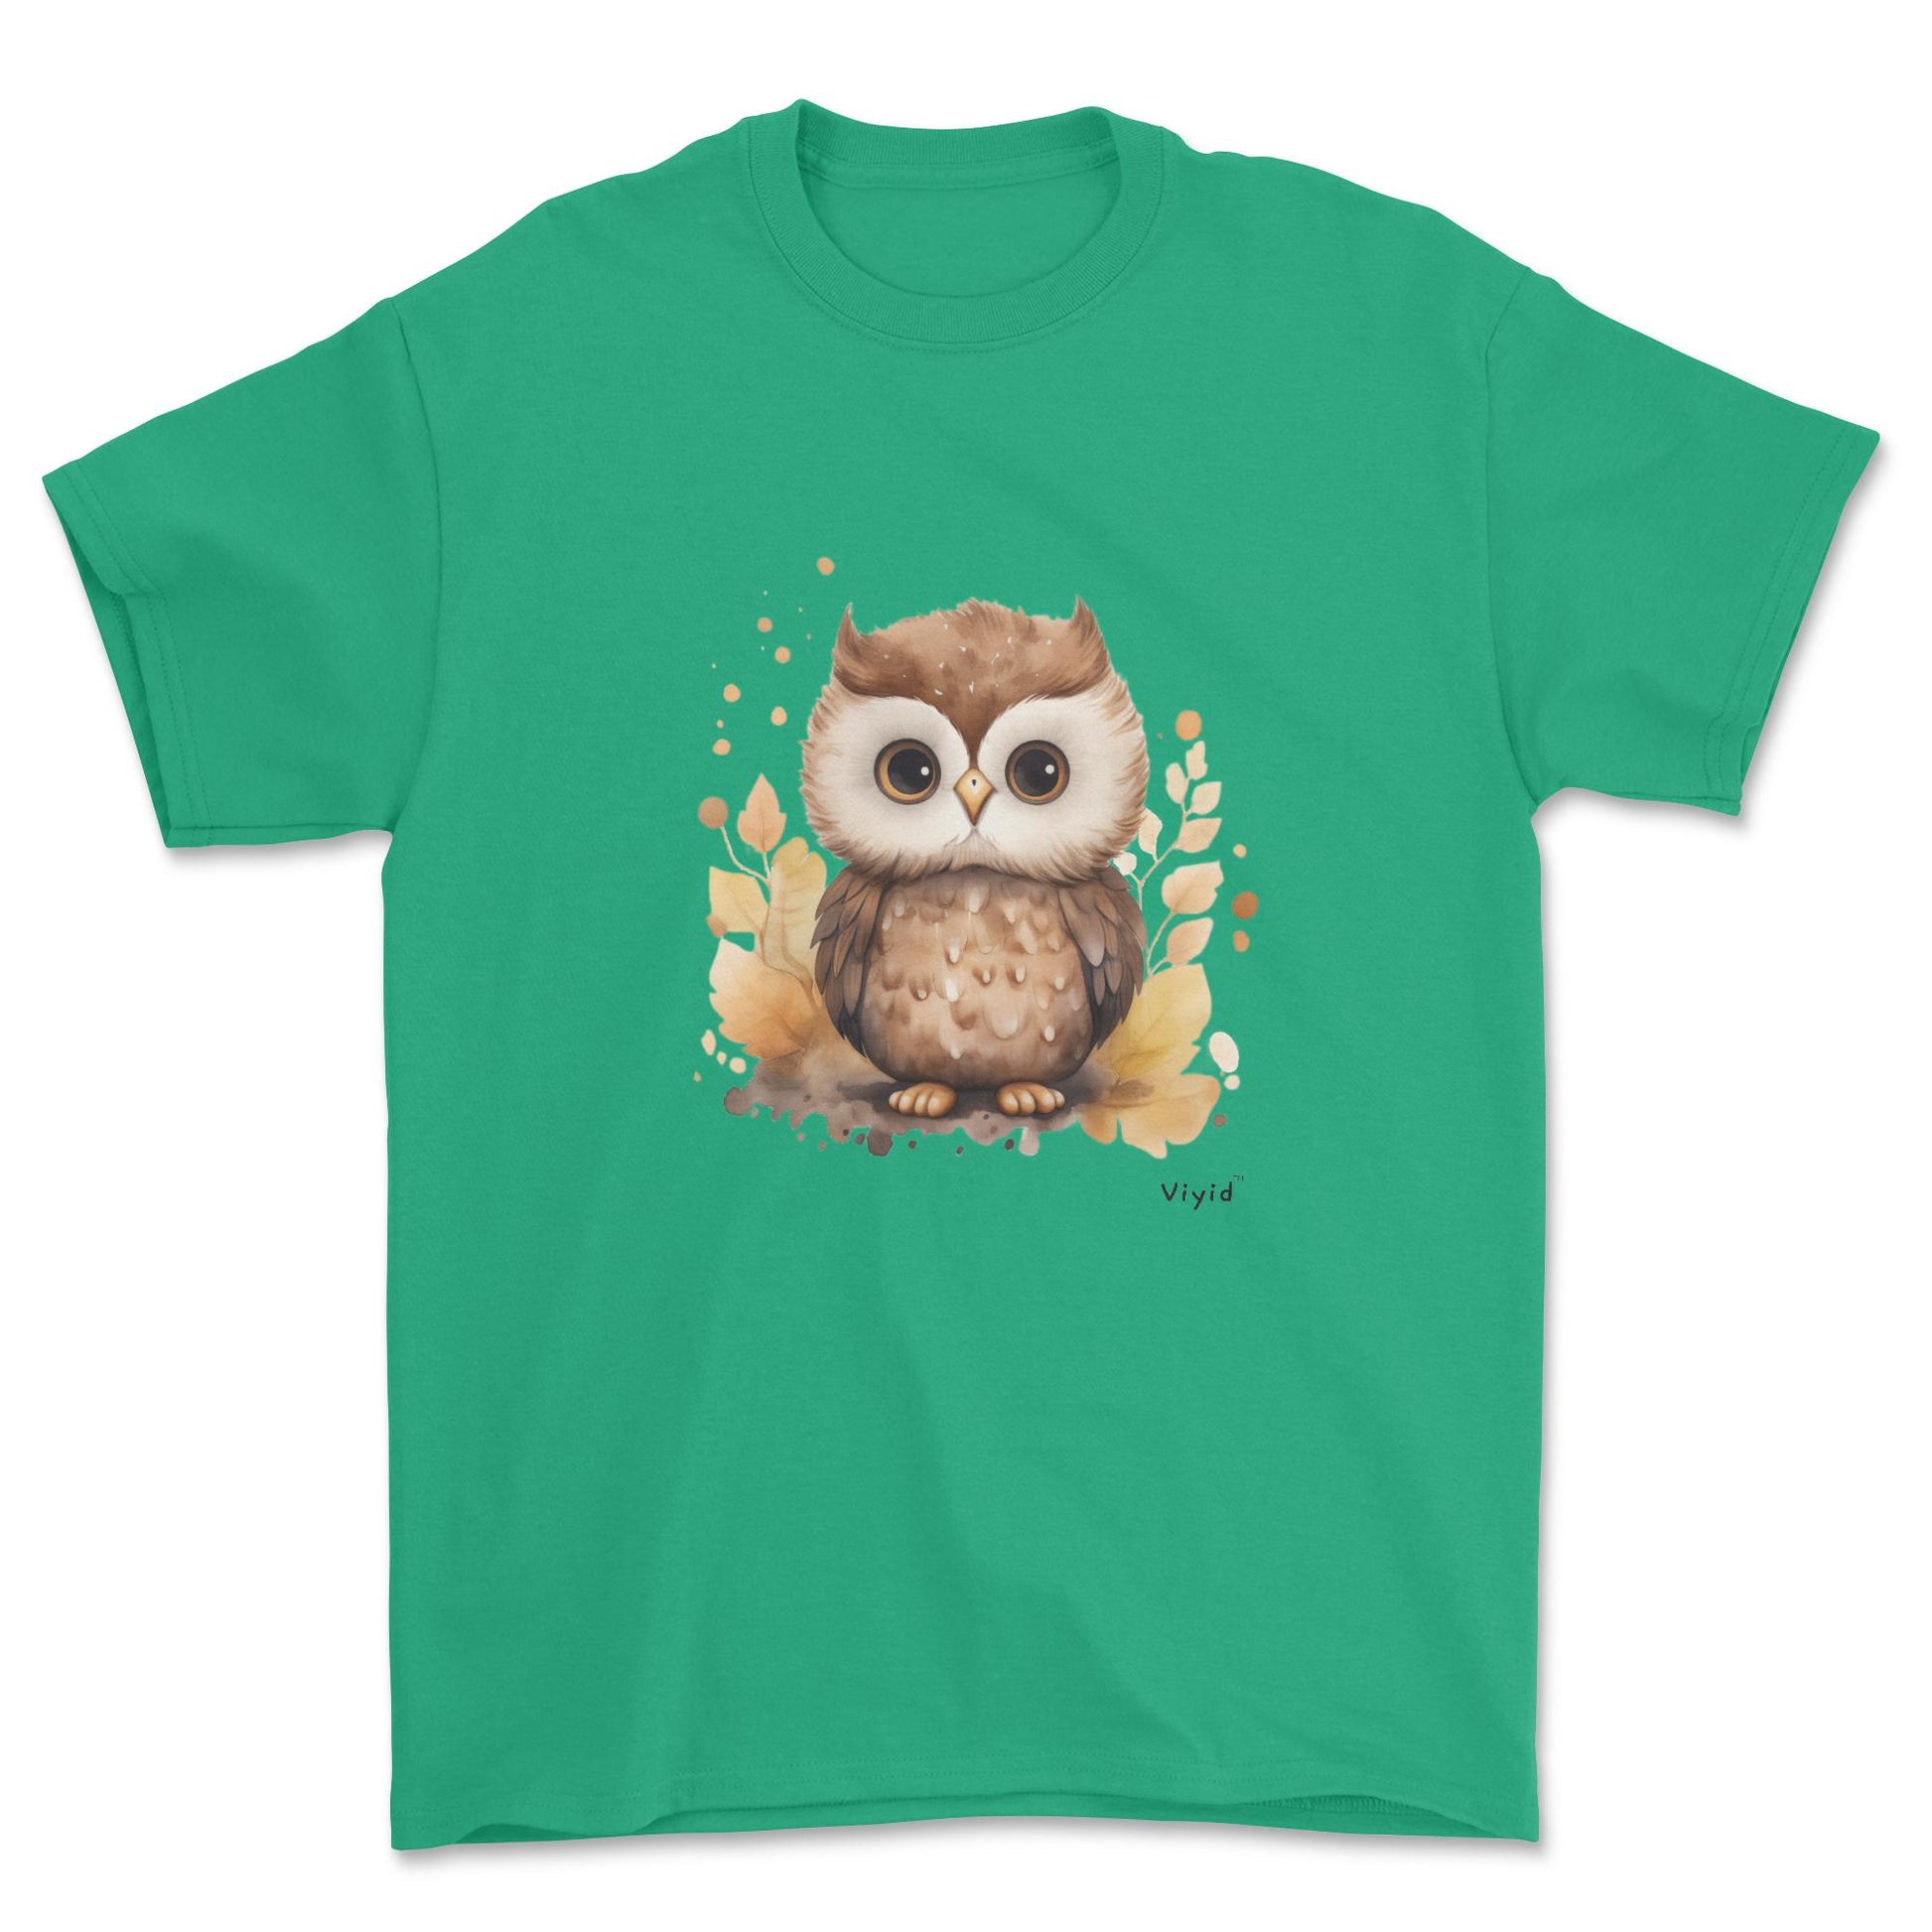 nocturnal owl youth t-shirt irish green